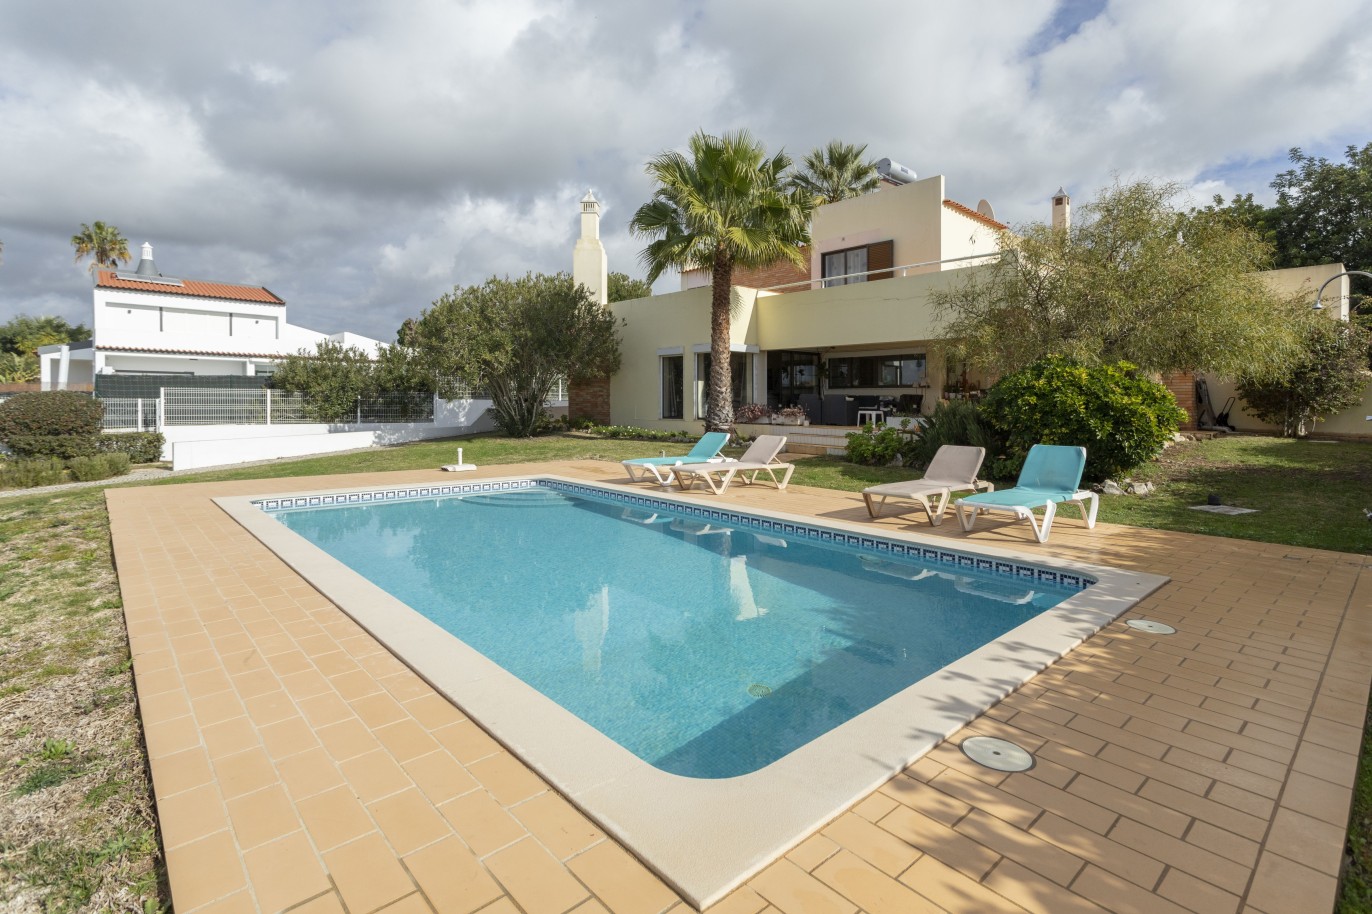 3 bedroom detached villa with pool, for sale in Vilamoura, Algarve_248843